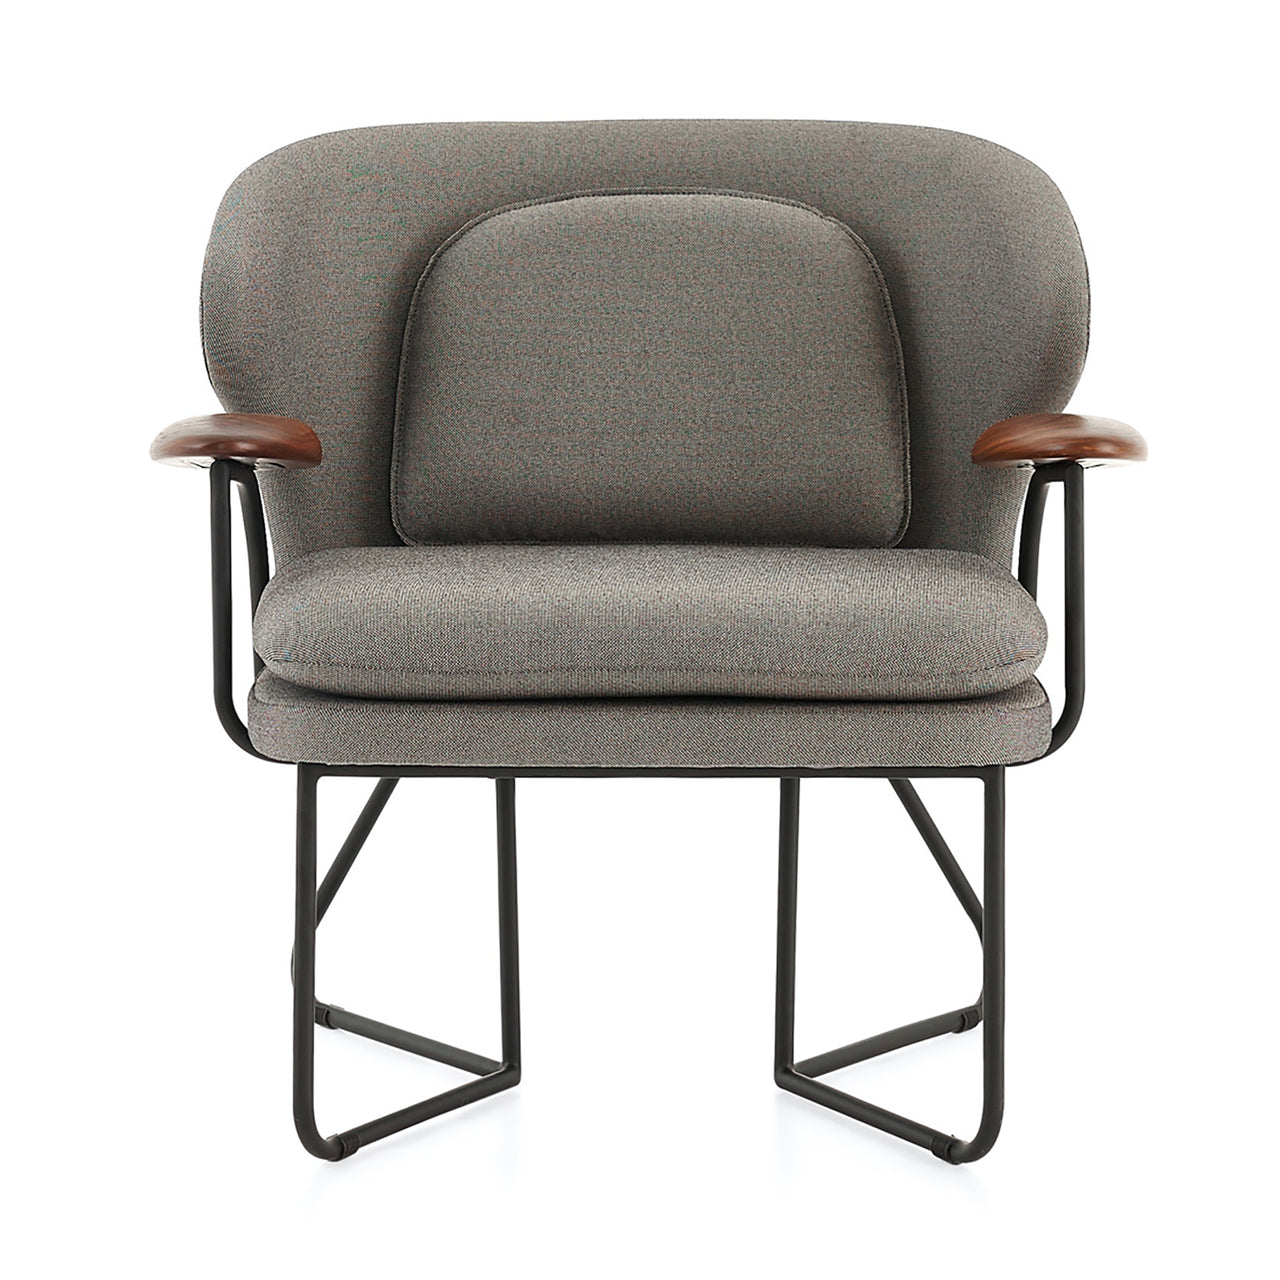 Chillax Lounge Chair: Natural Walnut